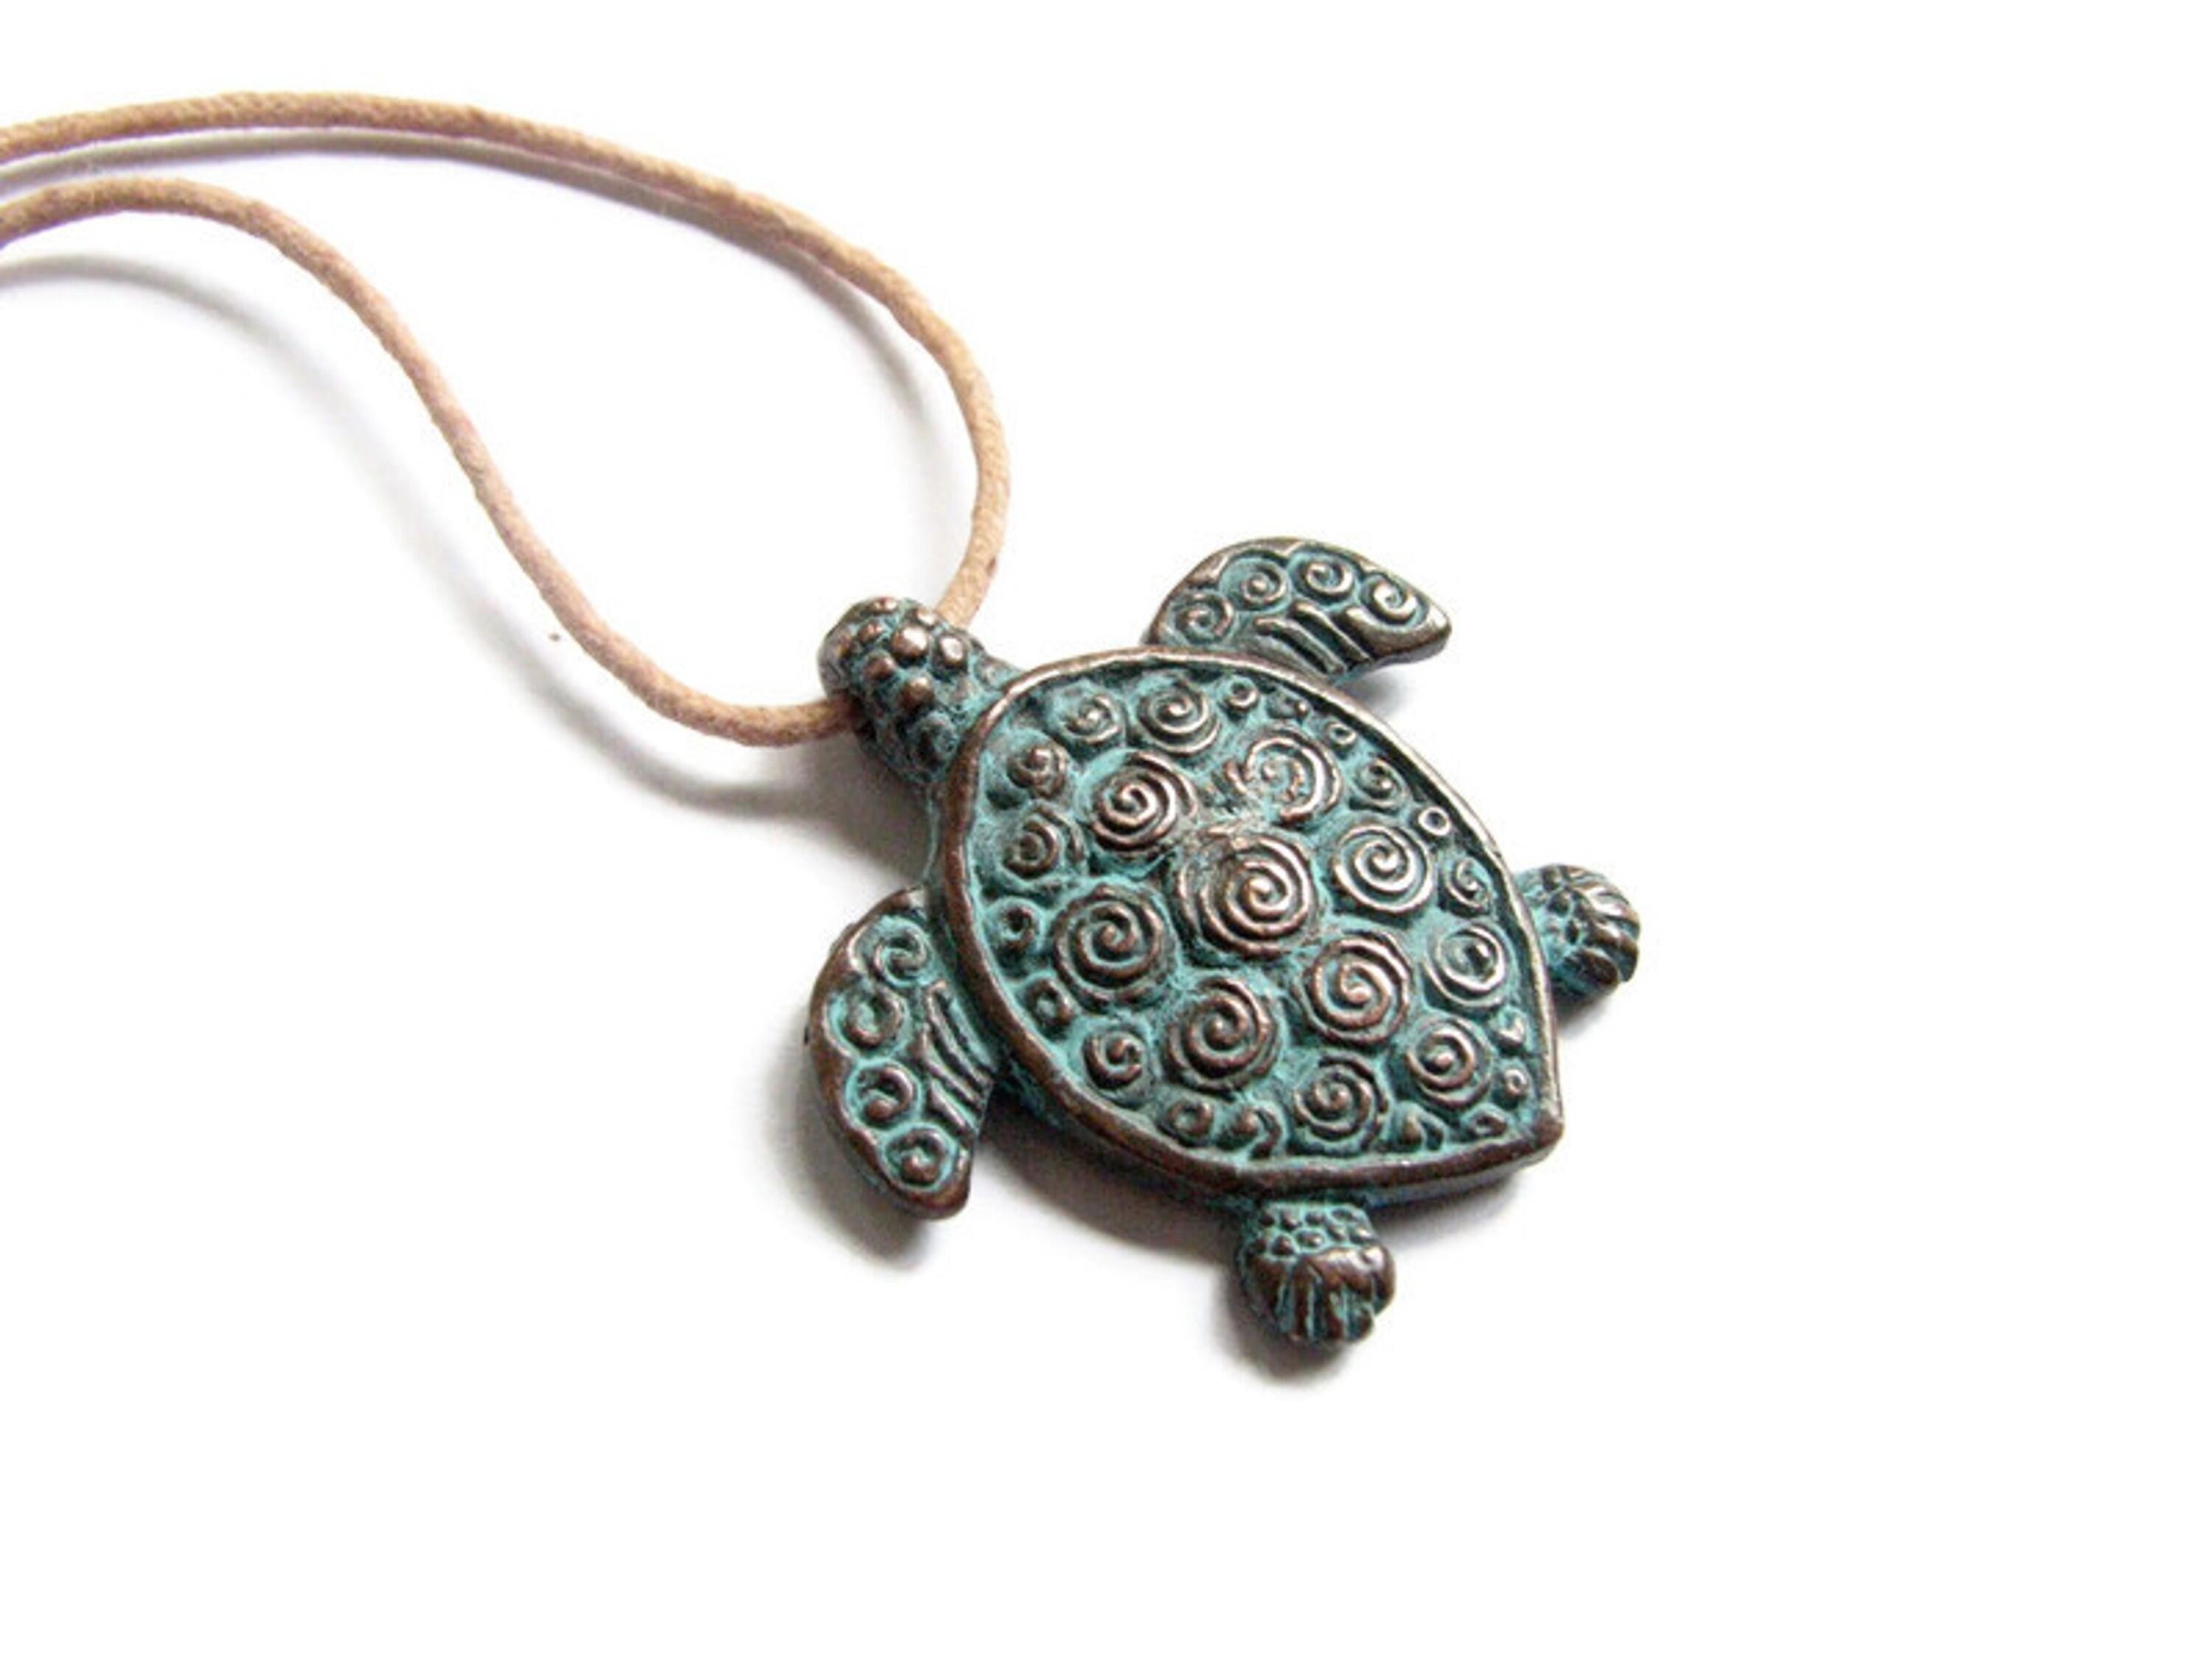 Mykonos Verdigris patina copper sea turtle pendant necklace